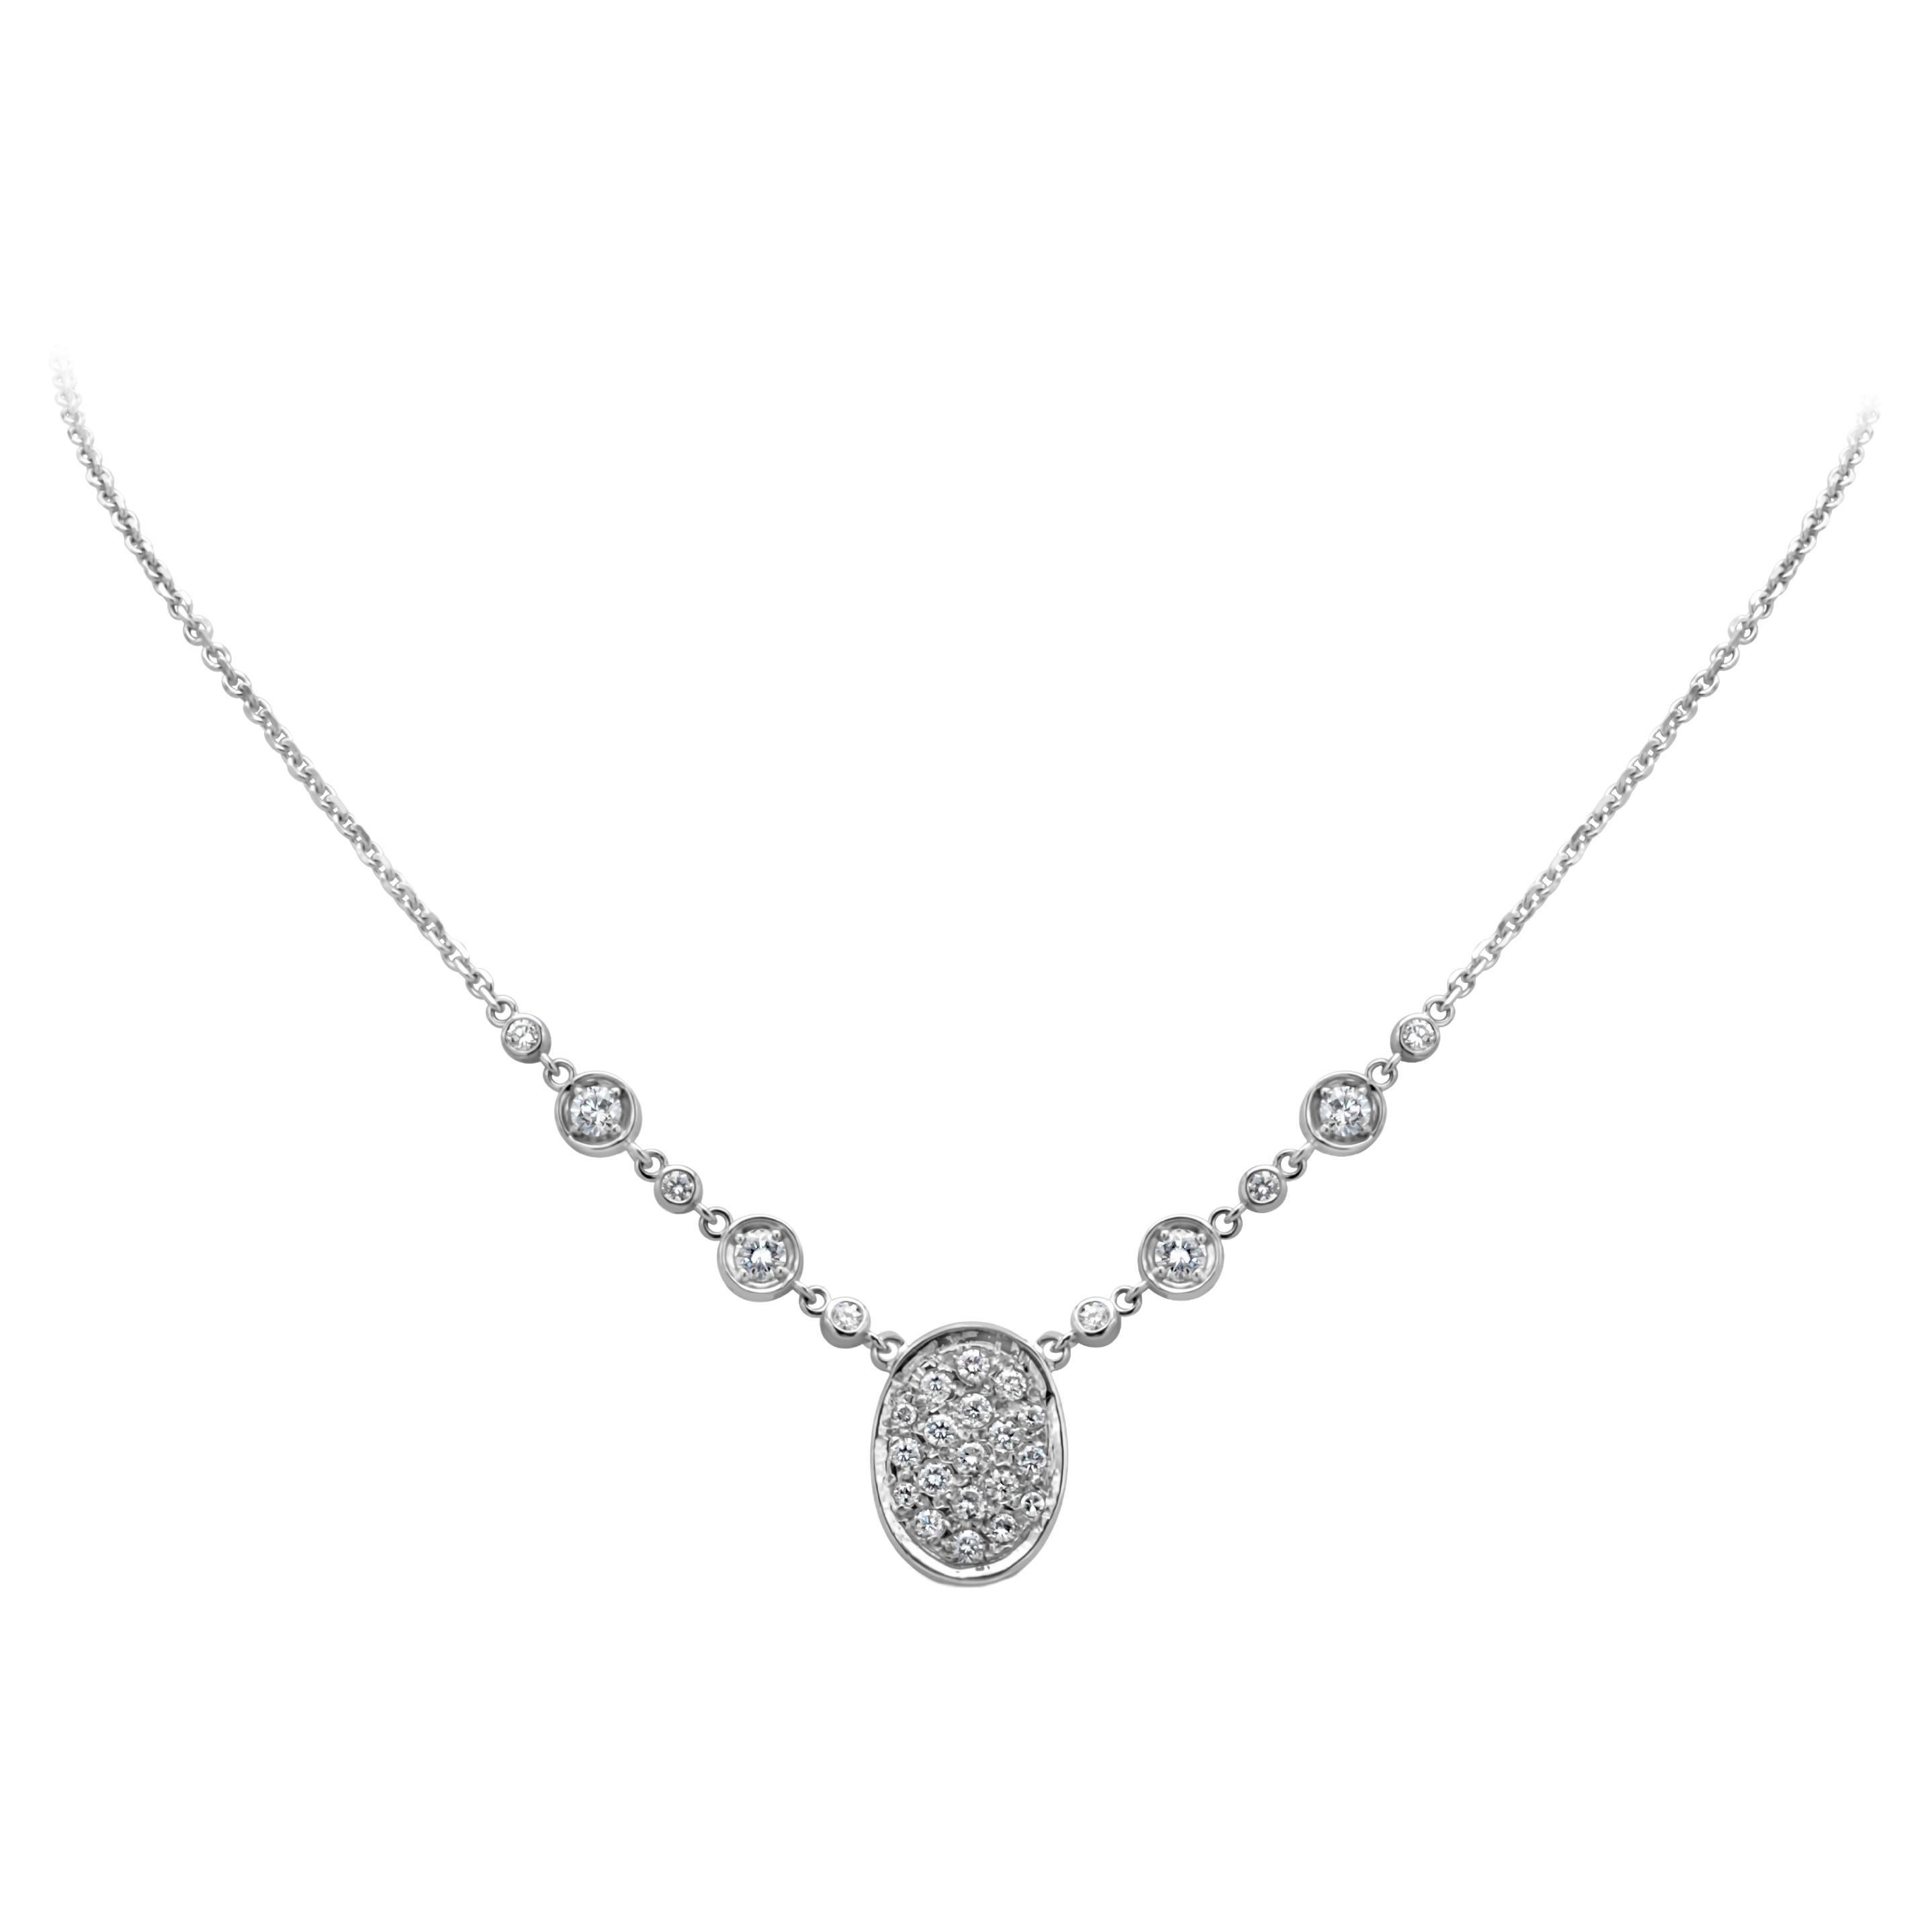 1.24 Carats Total Round Cut Diamond Fashion Pendant Necklace For Sale